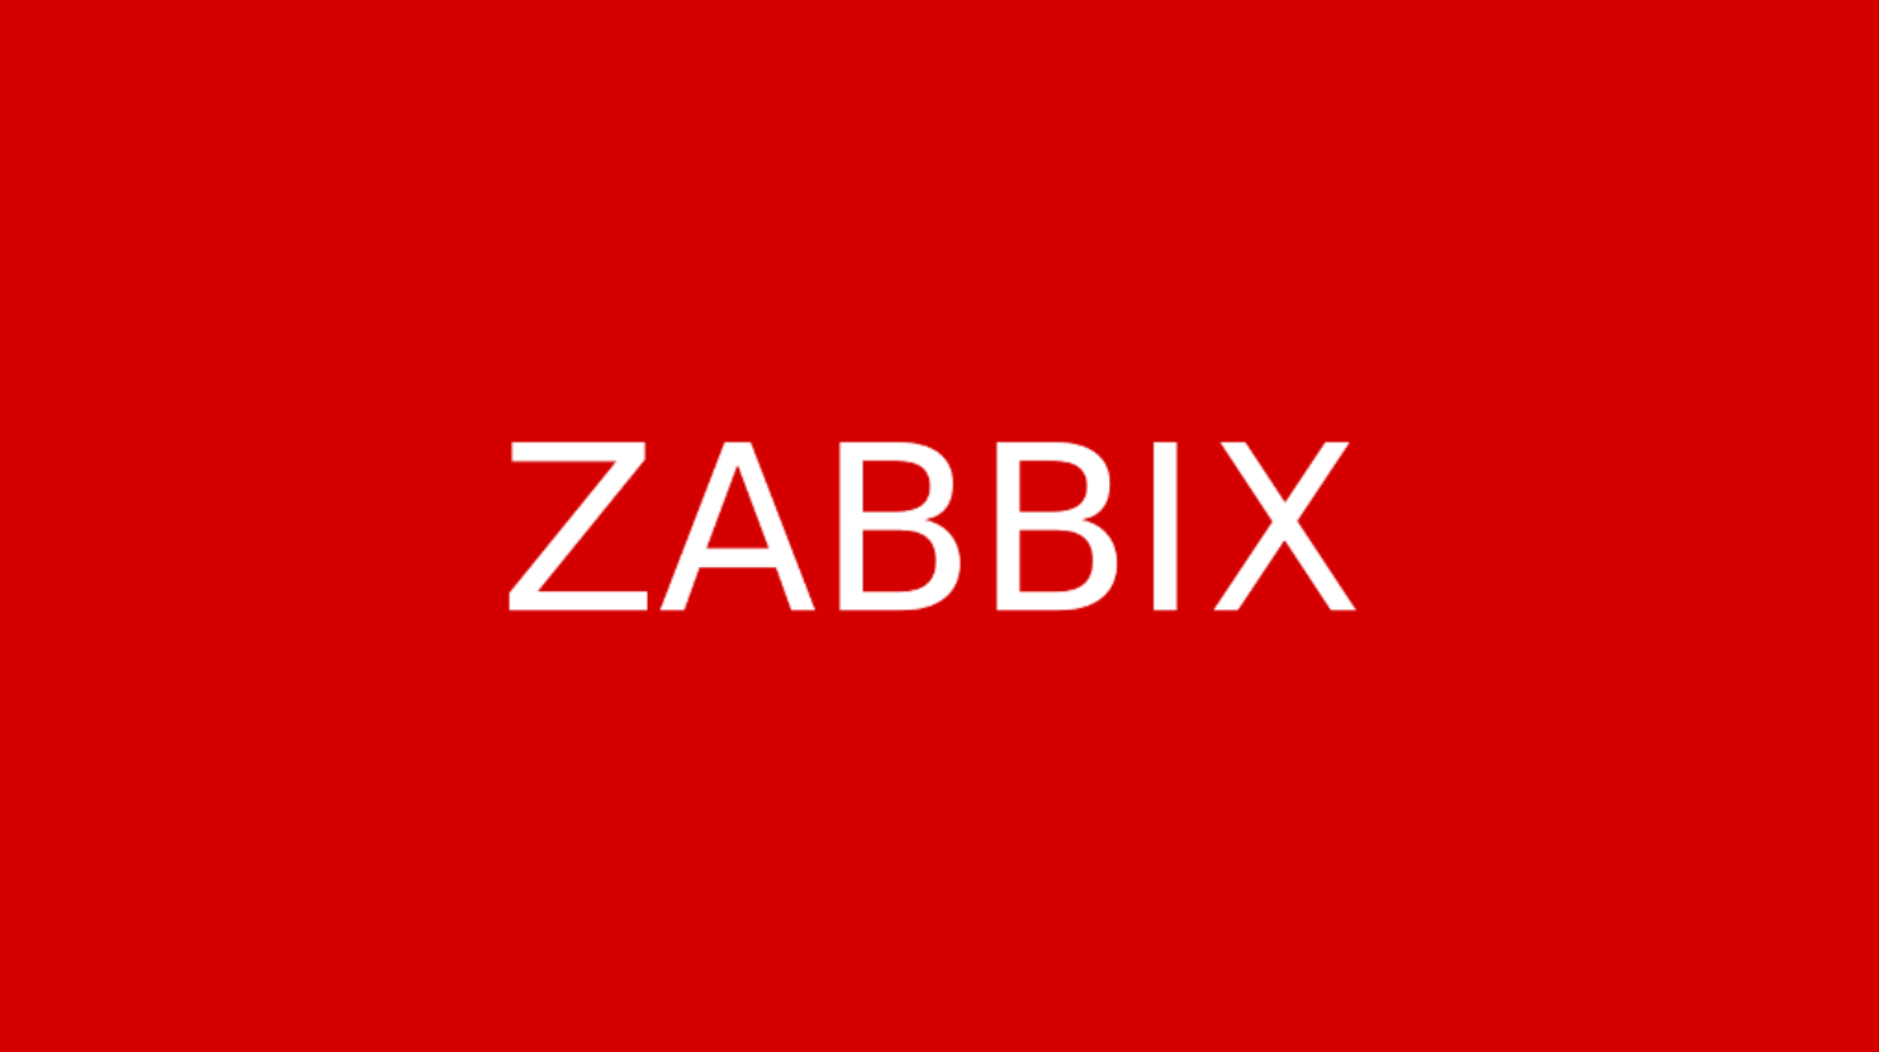 Monitor domain expiration using Zabbix